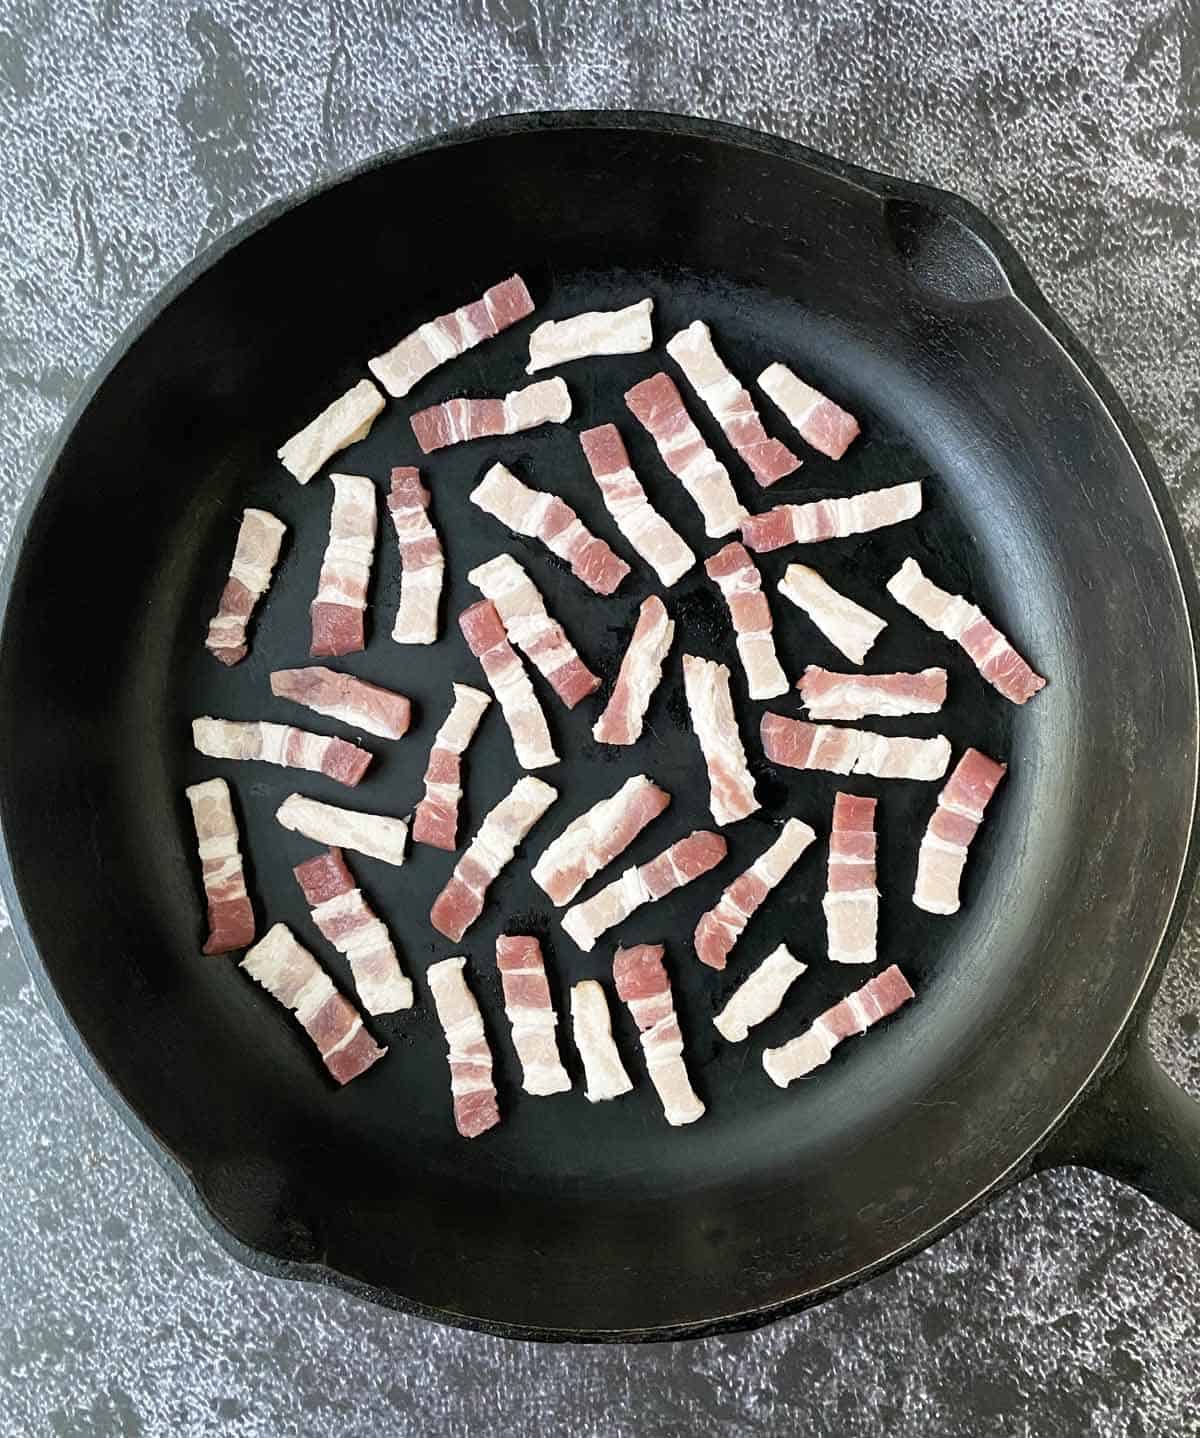 Several dozen raw bacon lardons in a cold cast iron skillet.